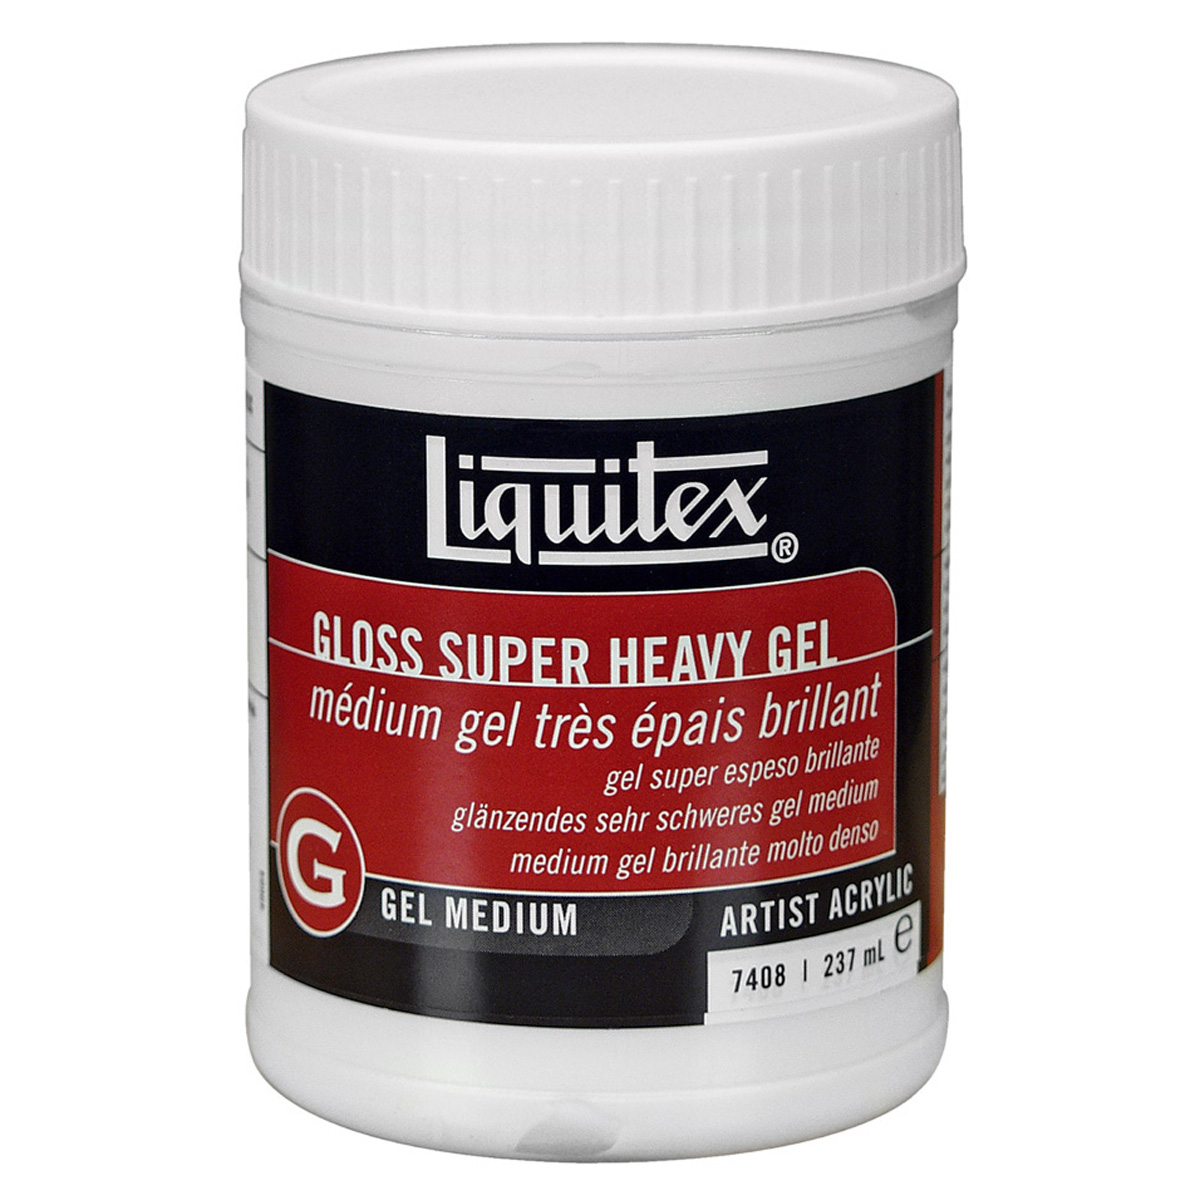 Liquitex® Gloss Super Heavy Gel Medium